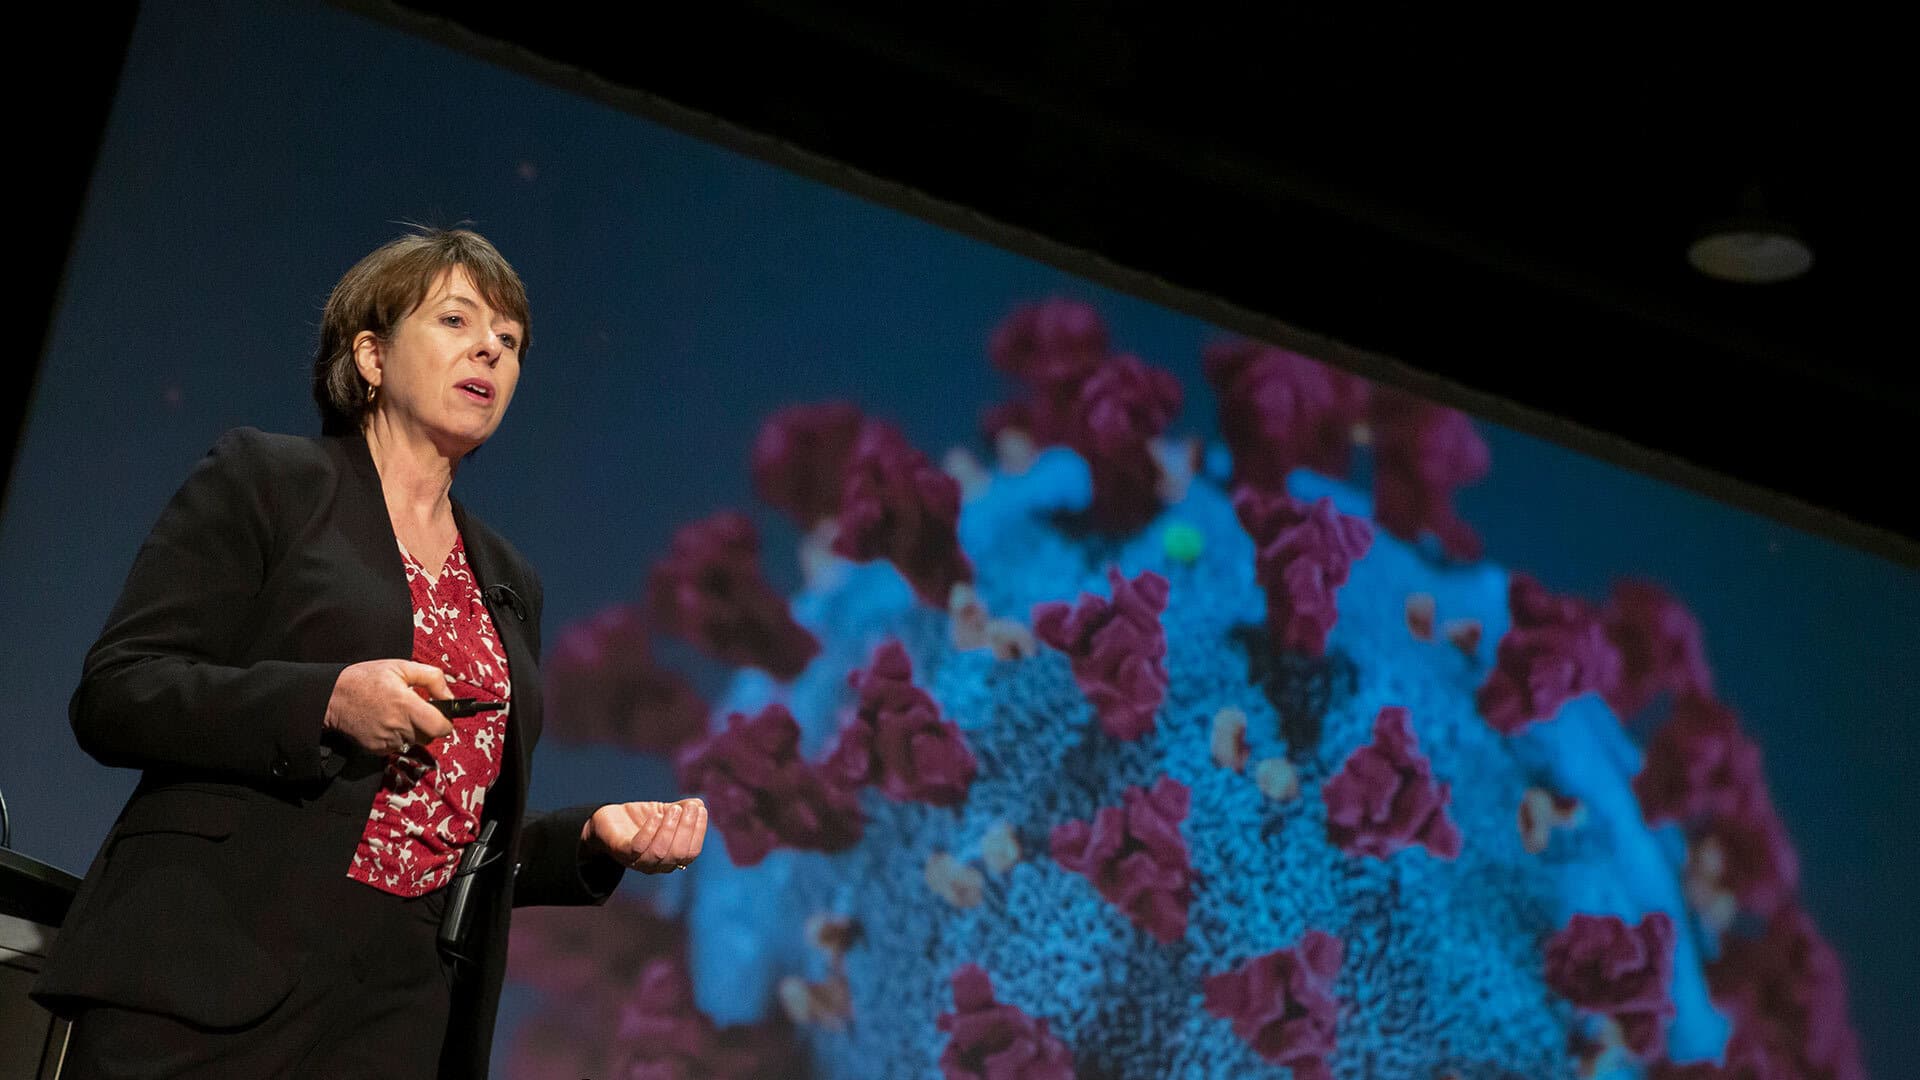 Cynthia Baur speaks at a symposium about coronavirus